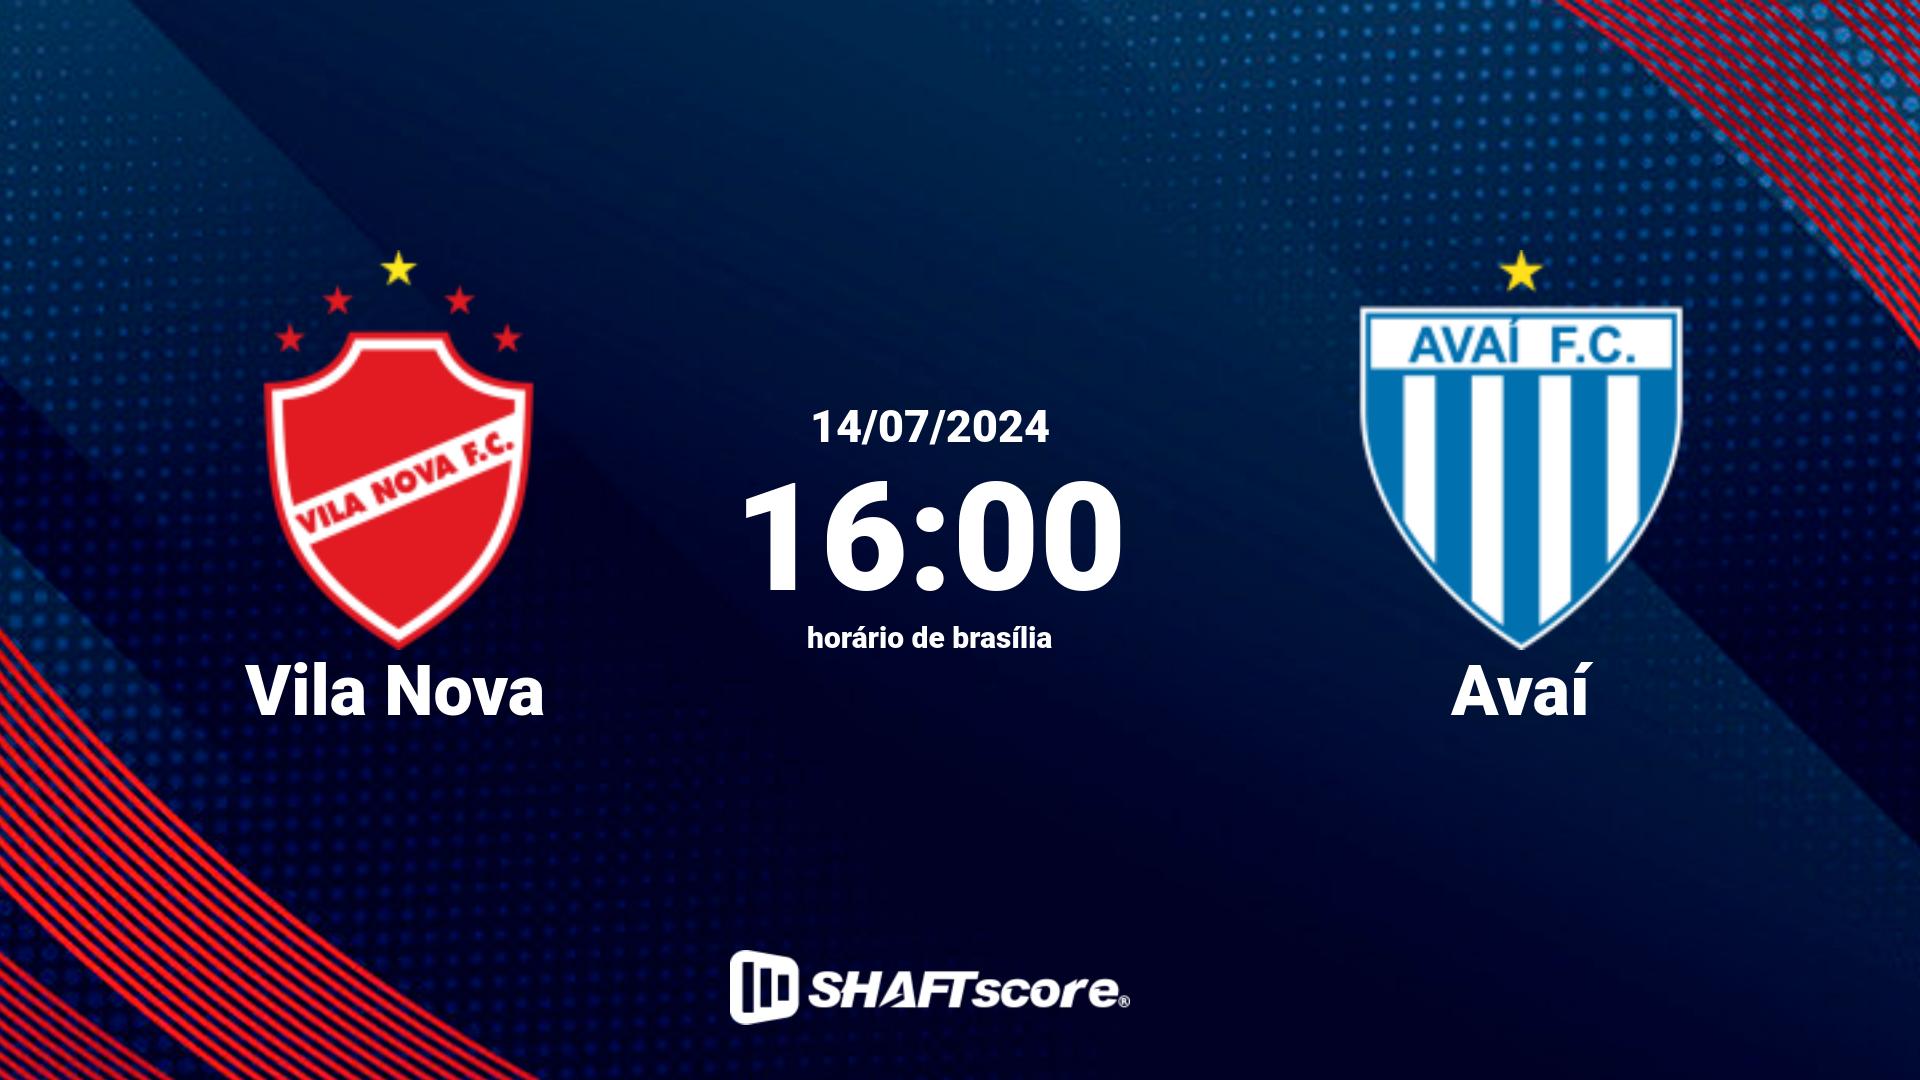 Estatísticas do jogo Vila Nova vs Avaí 14.07 16:00